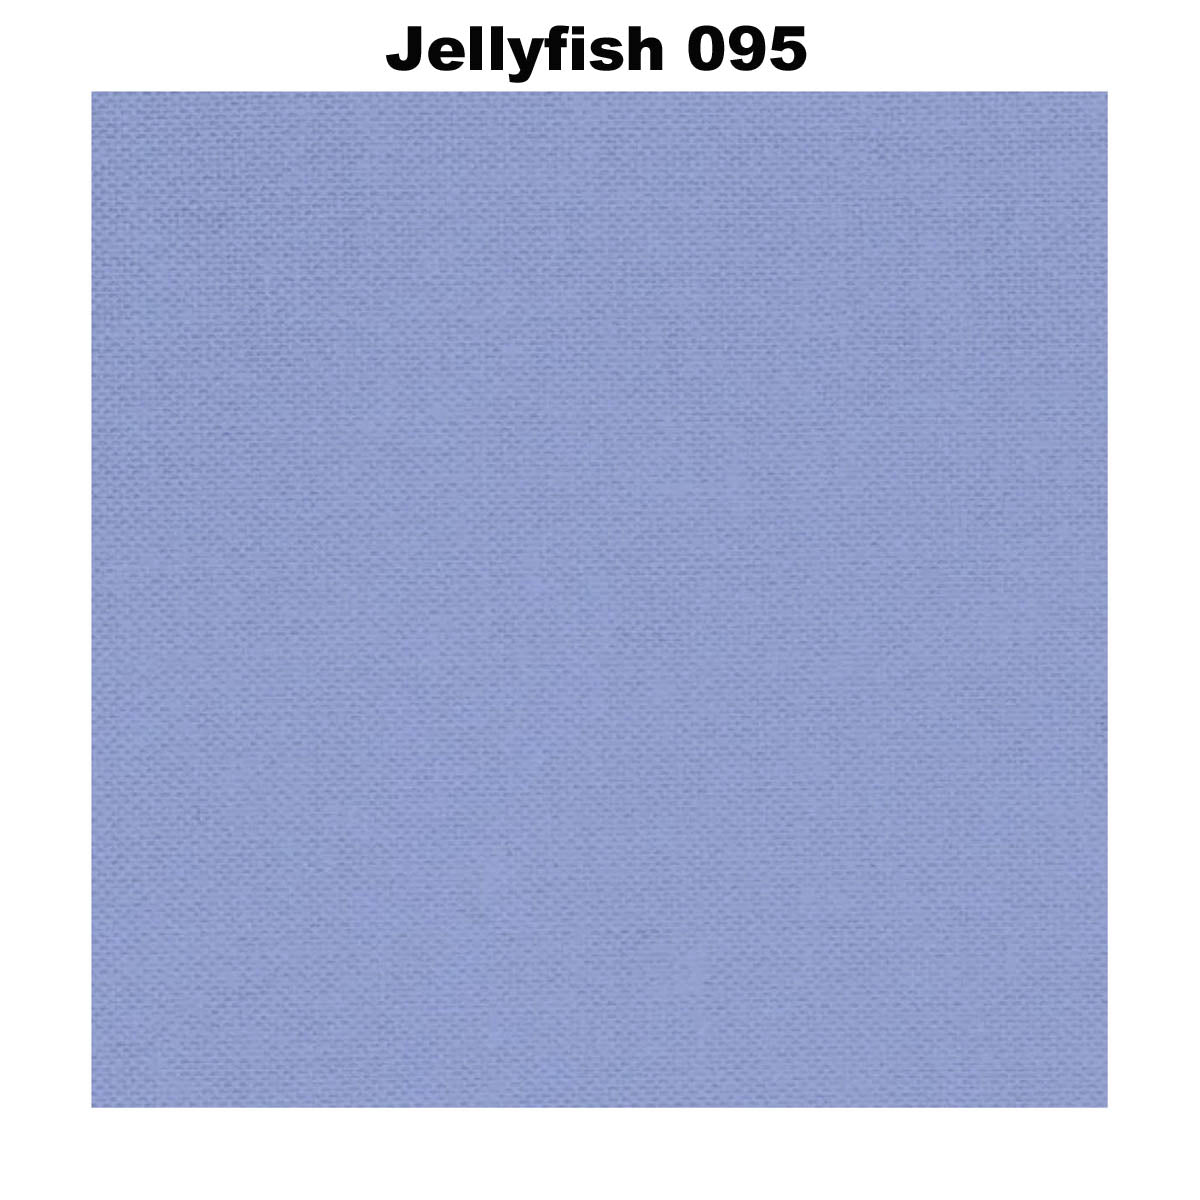 D/S Devonstone Solids - 095 Jellyfish